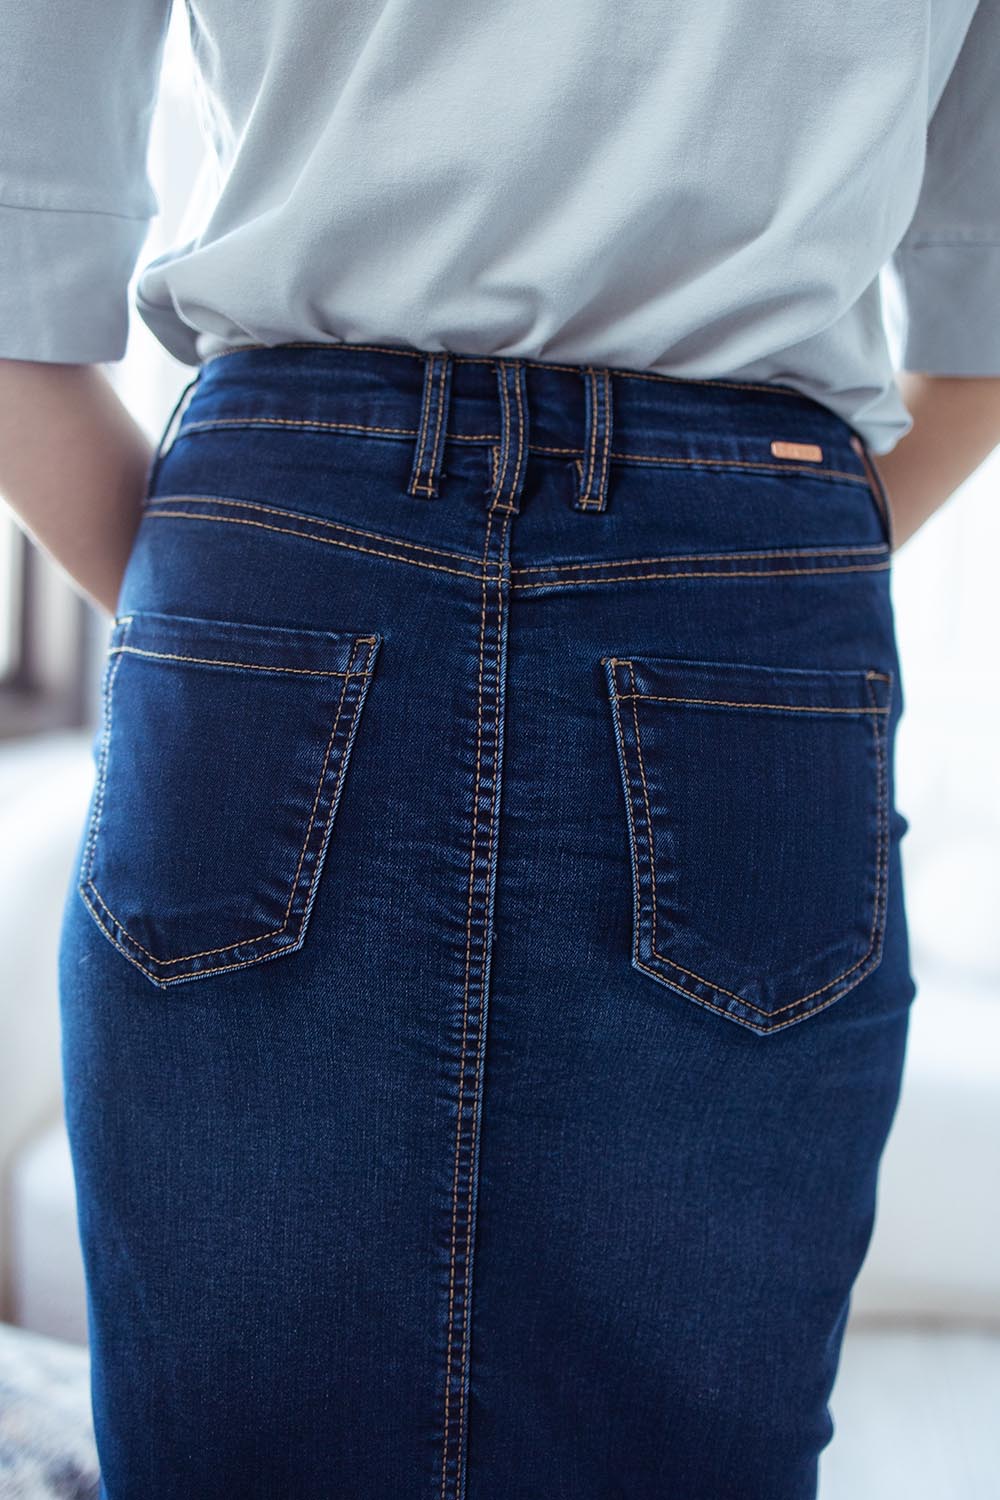 blue stretchy tznius knee length jean skirt with pockets